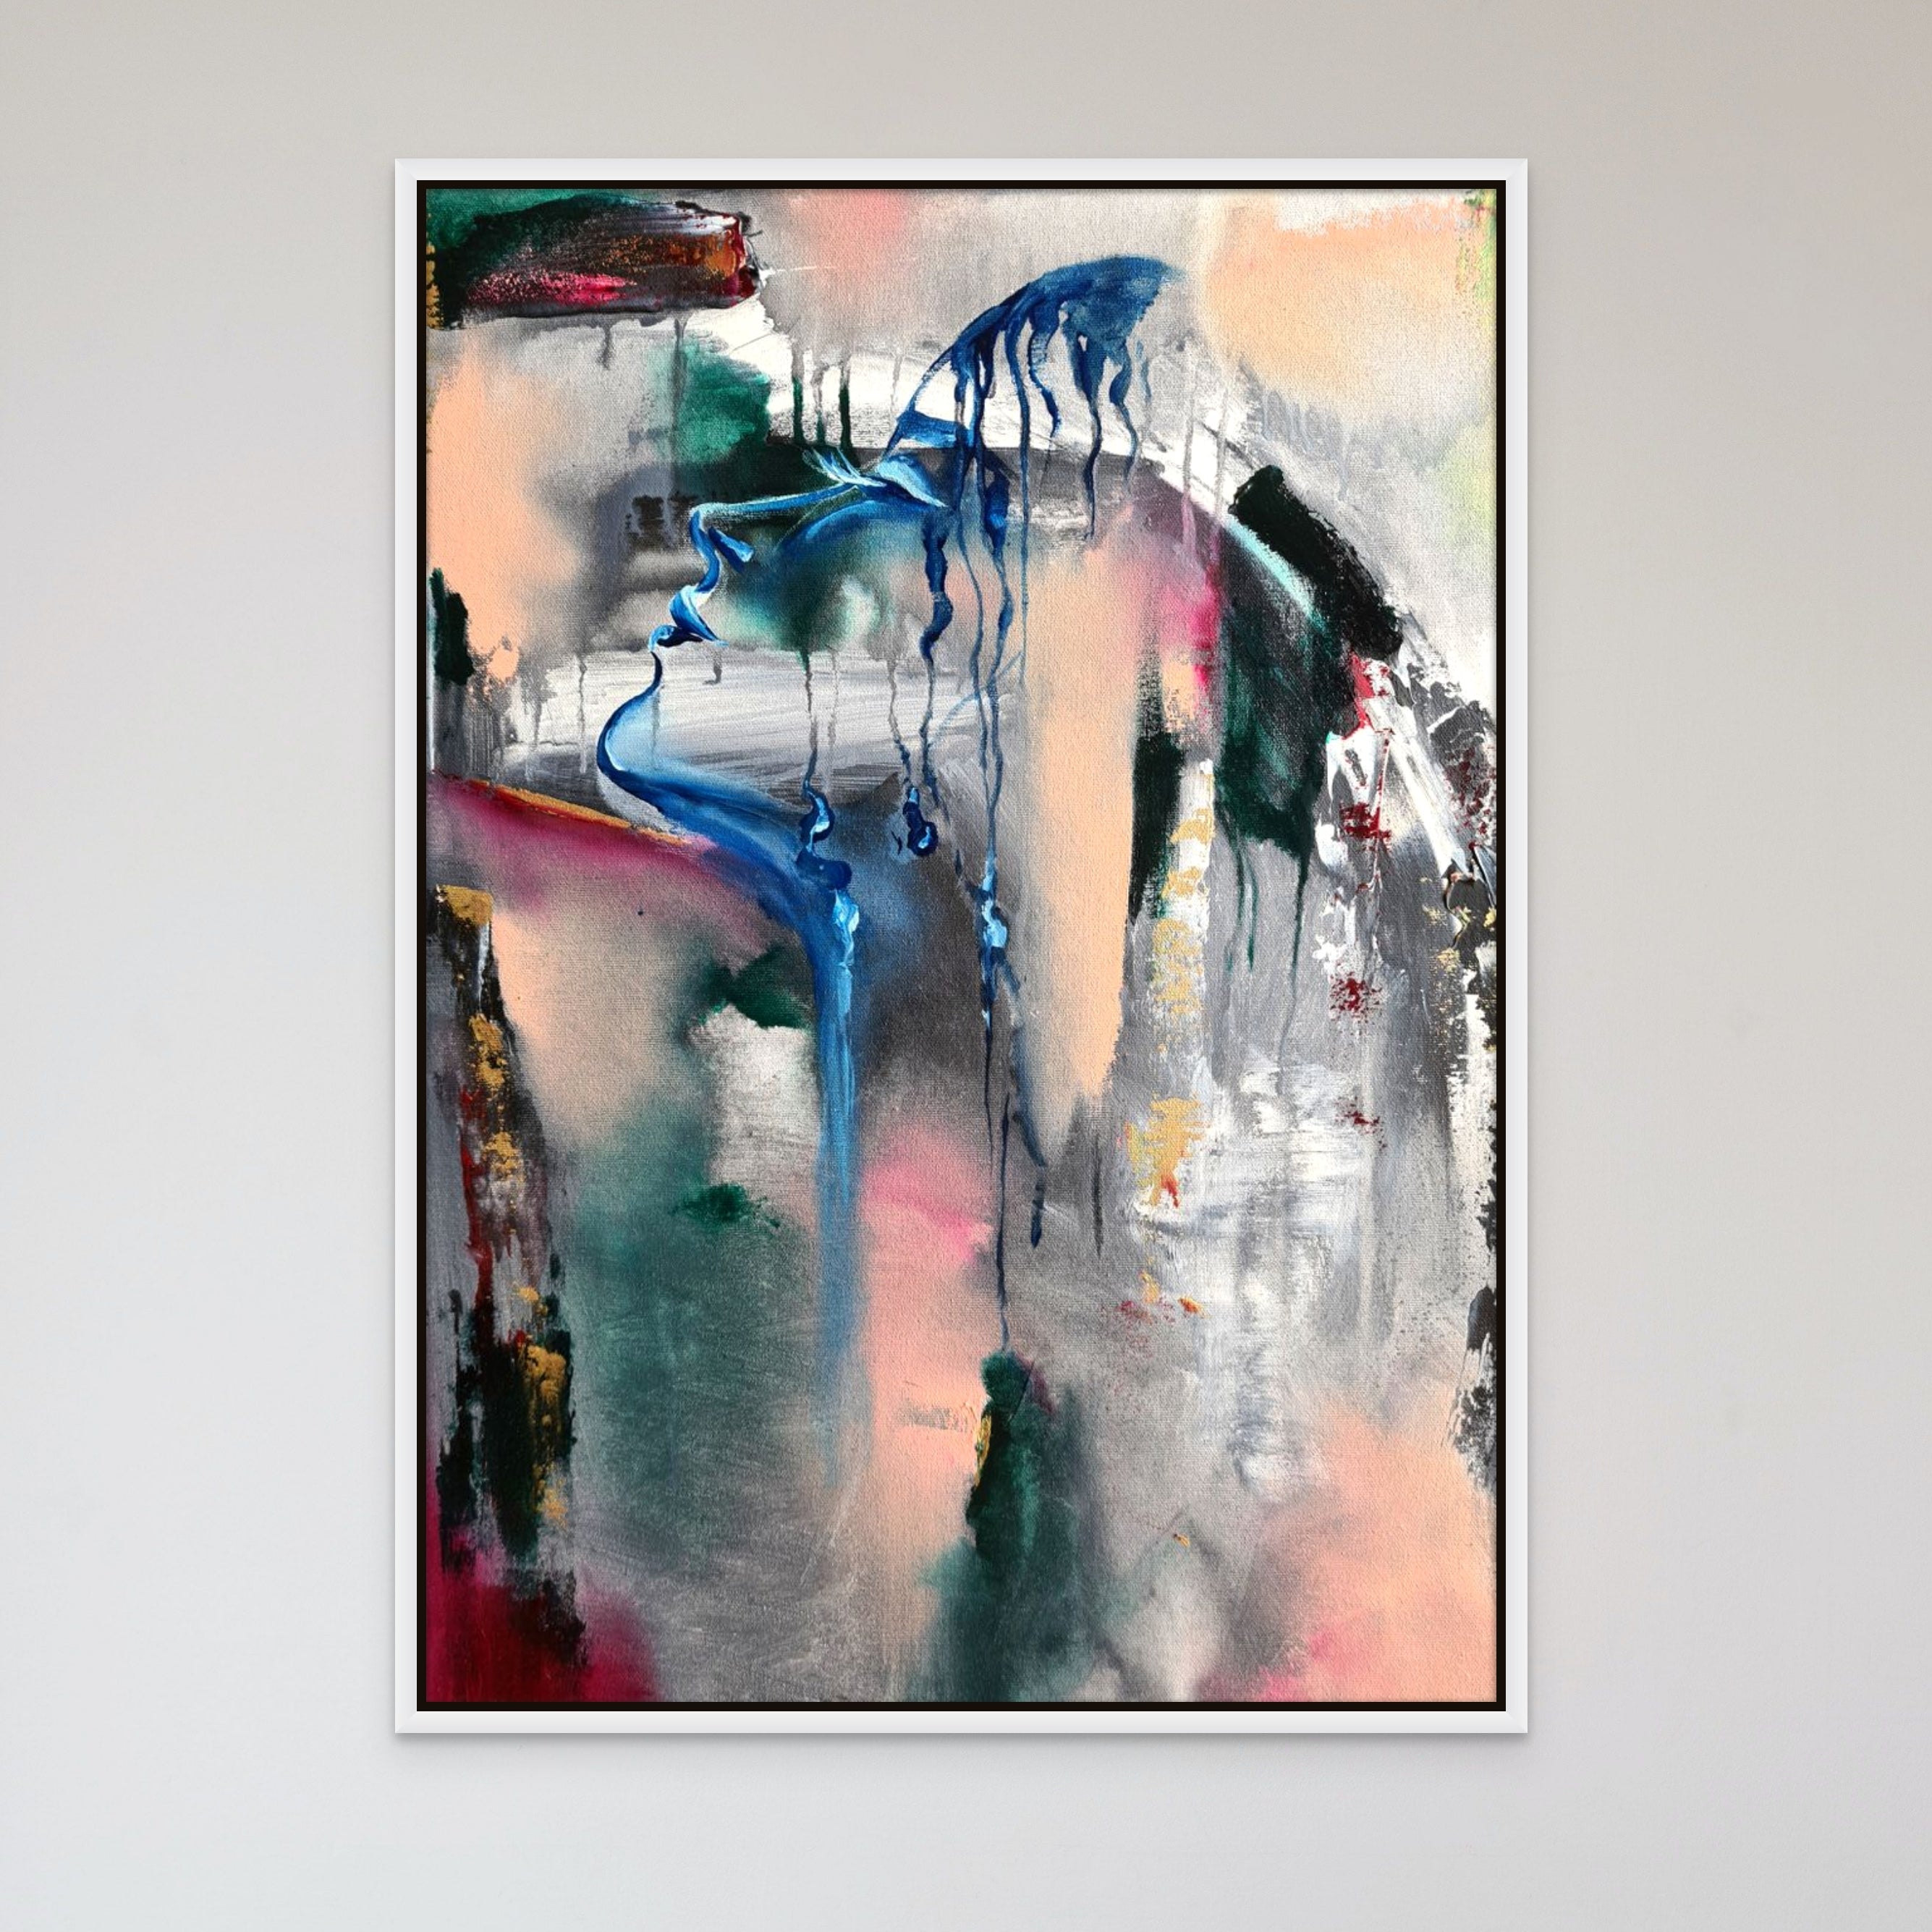 "A Gulp Of Air" Original abstract portrait on canvas